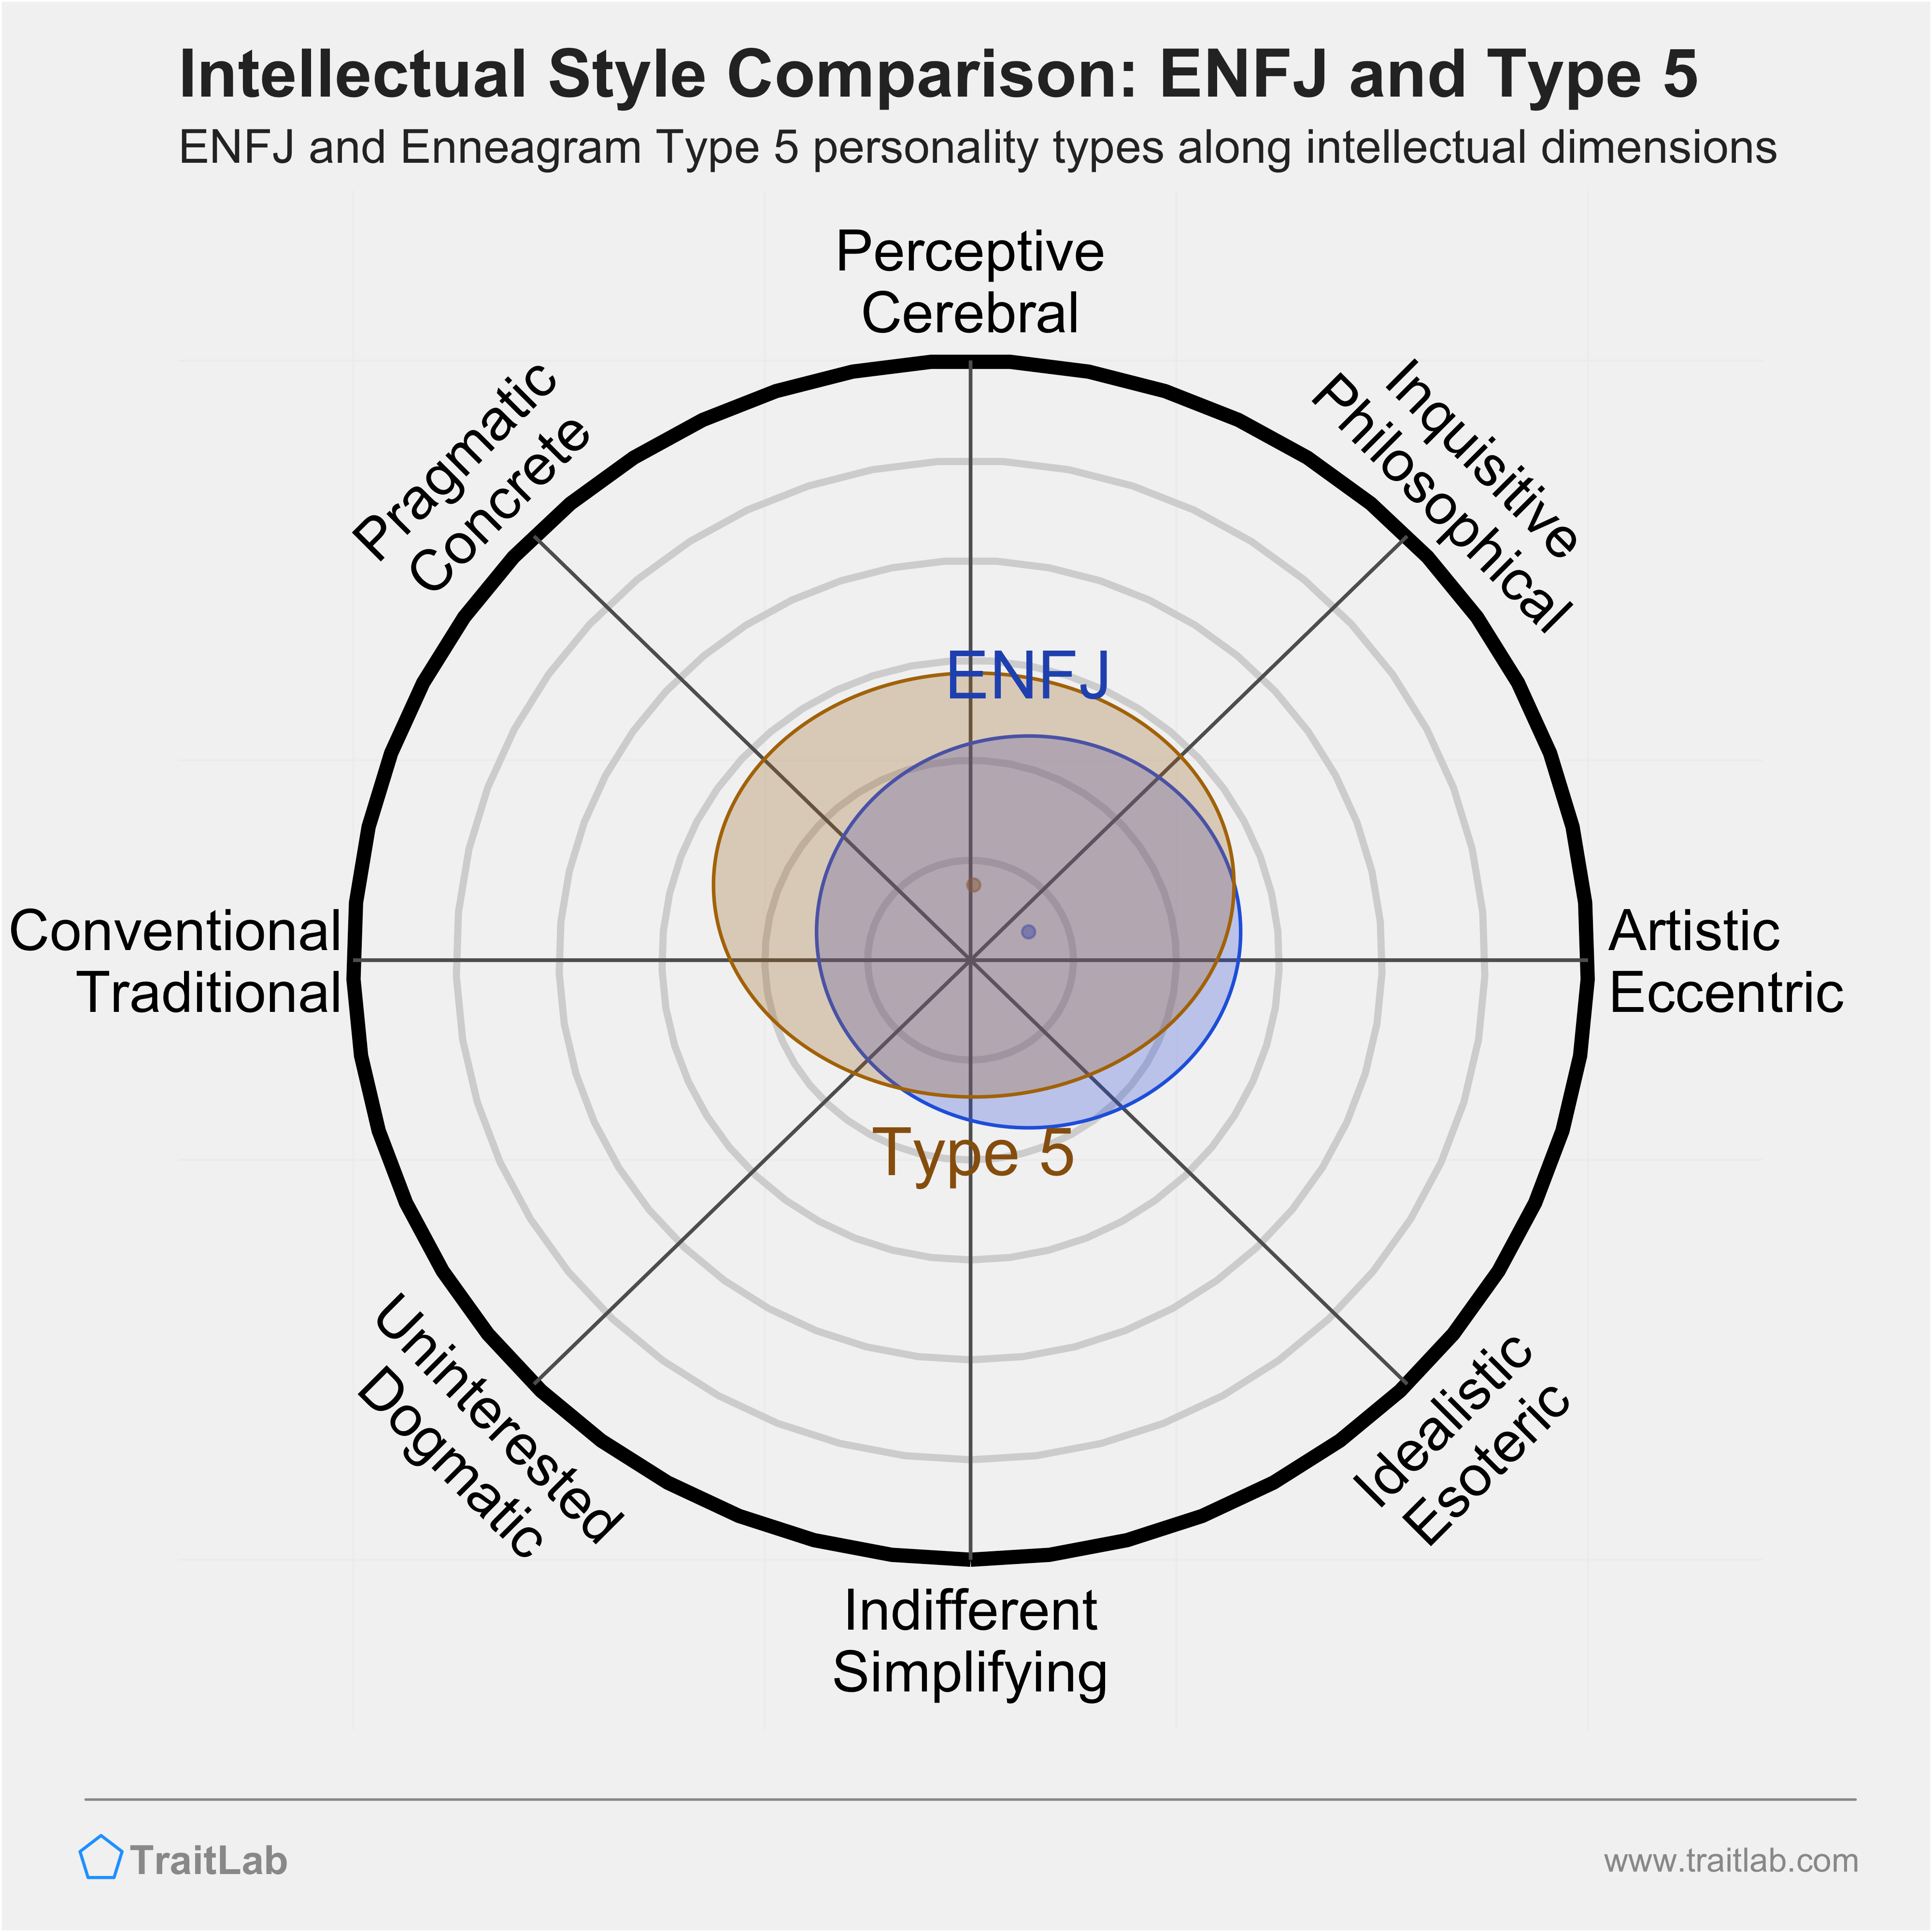 ENFJ and Type 5 comparison across intellectual dimensions